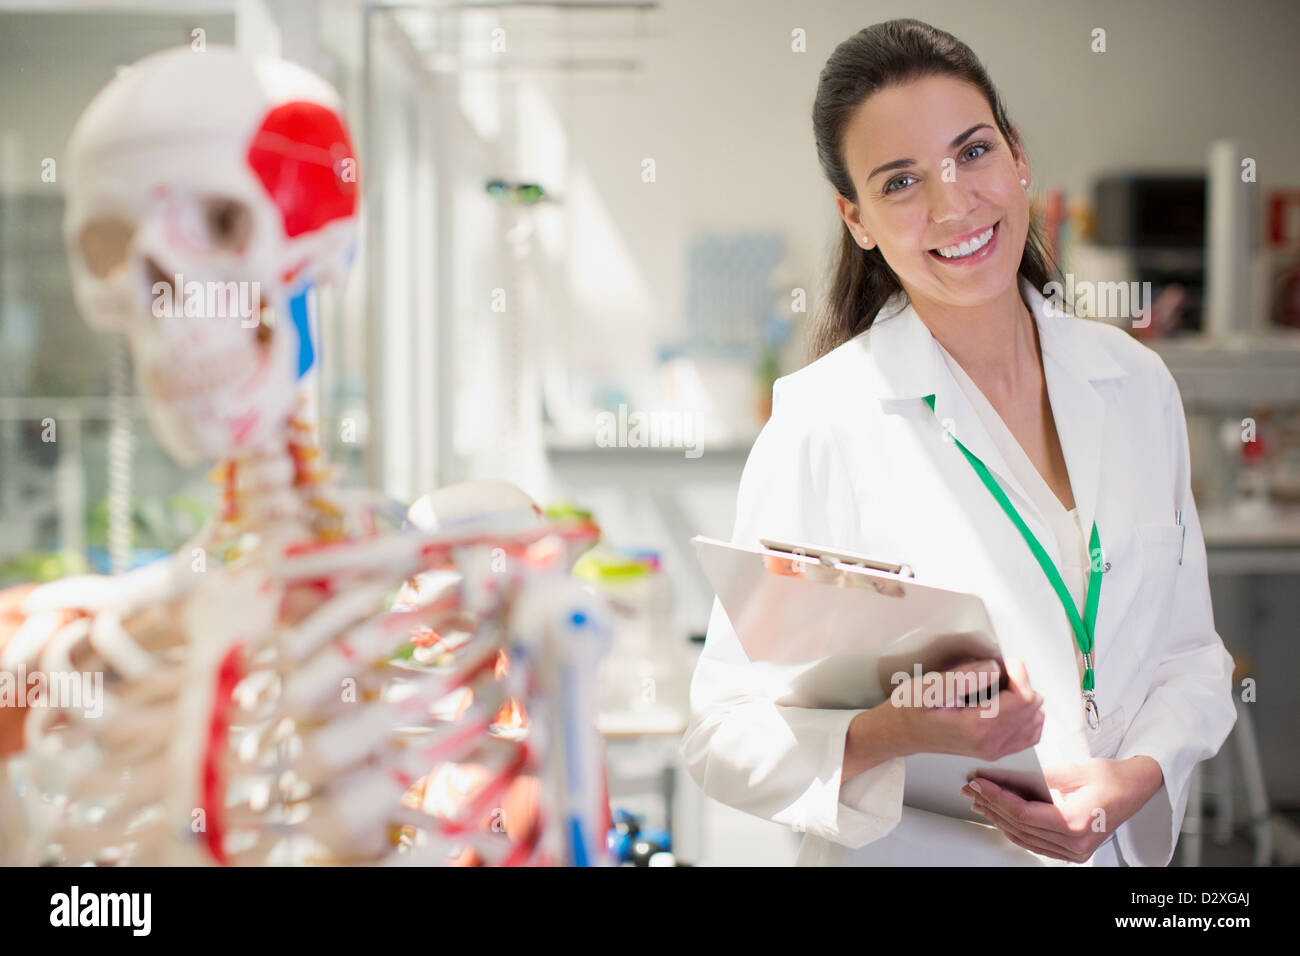 Portrait of smiling scientist with anatomical model et presse-papiers in laboratory Banque D'Images